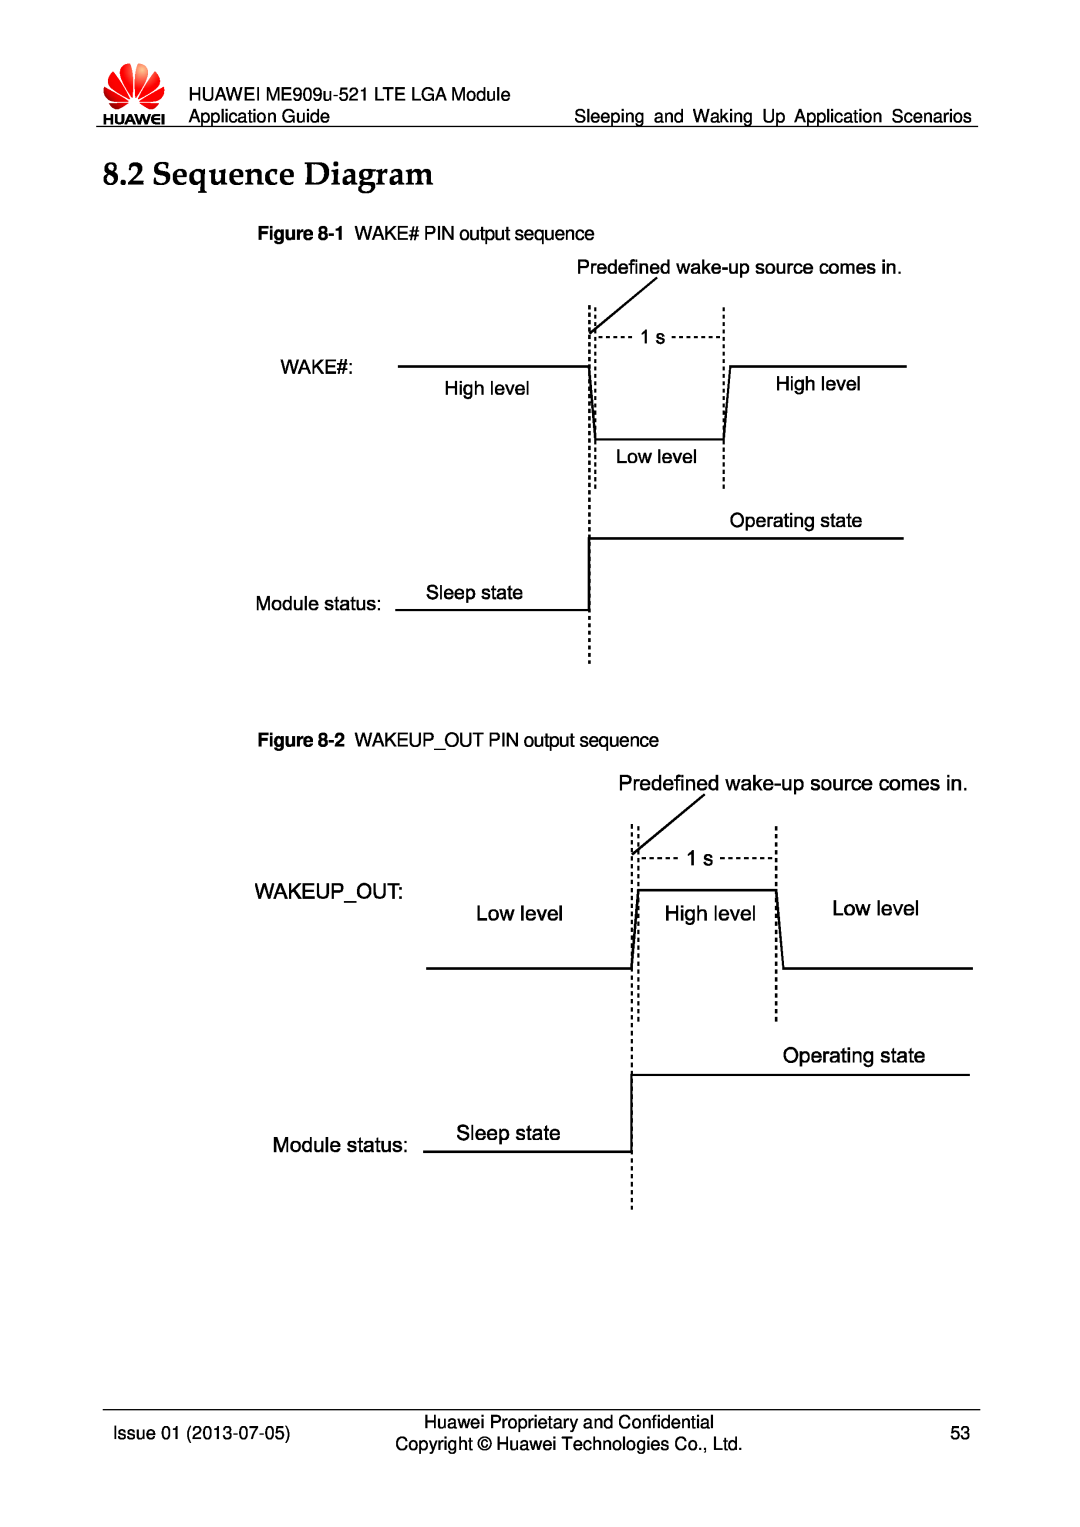 Huawei manual Sequence Diagram, HUAWEI ME909u-521 LTE LGA Module, Application Guide, Issue 01 